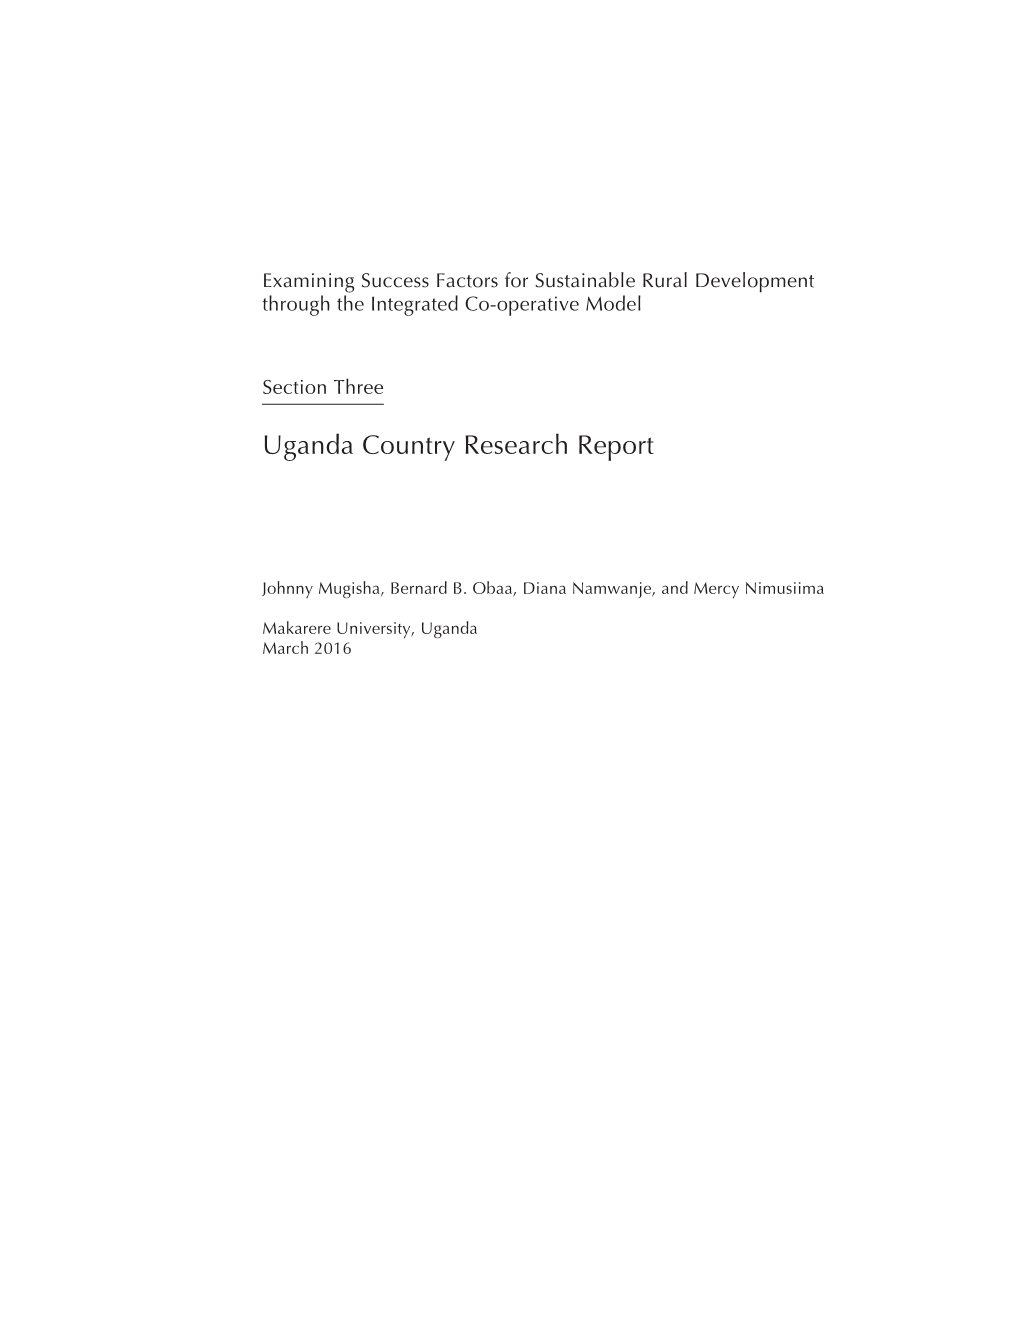 Uganda Country Research Report